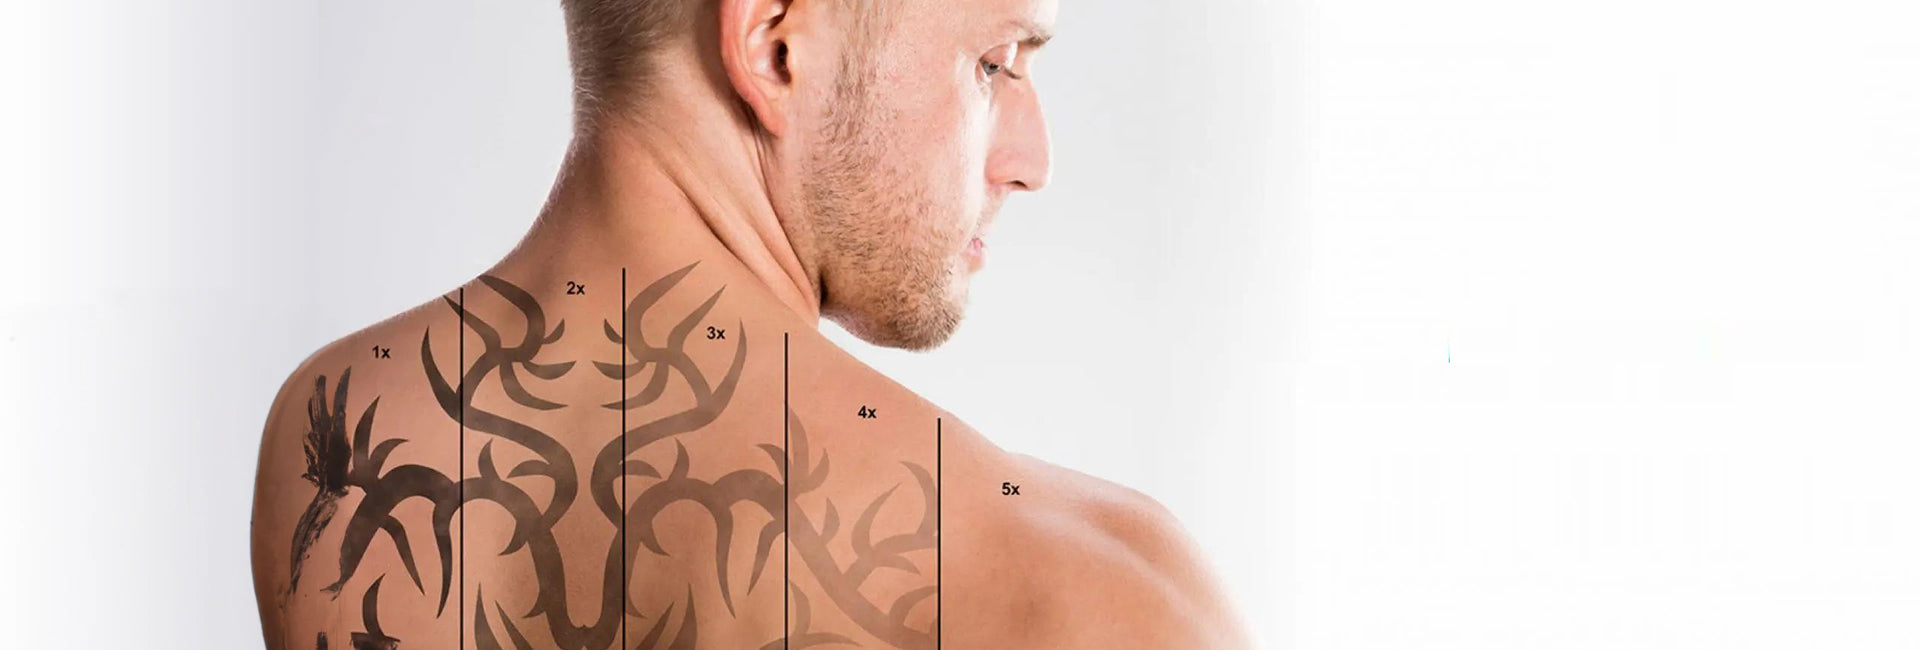 20 Bizarre Tattoos Full of Permanent Regret - Facepalm Gallery